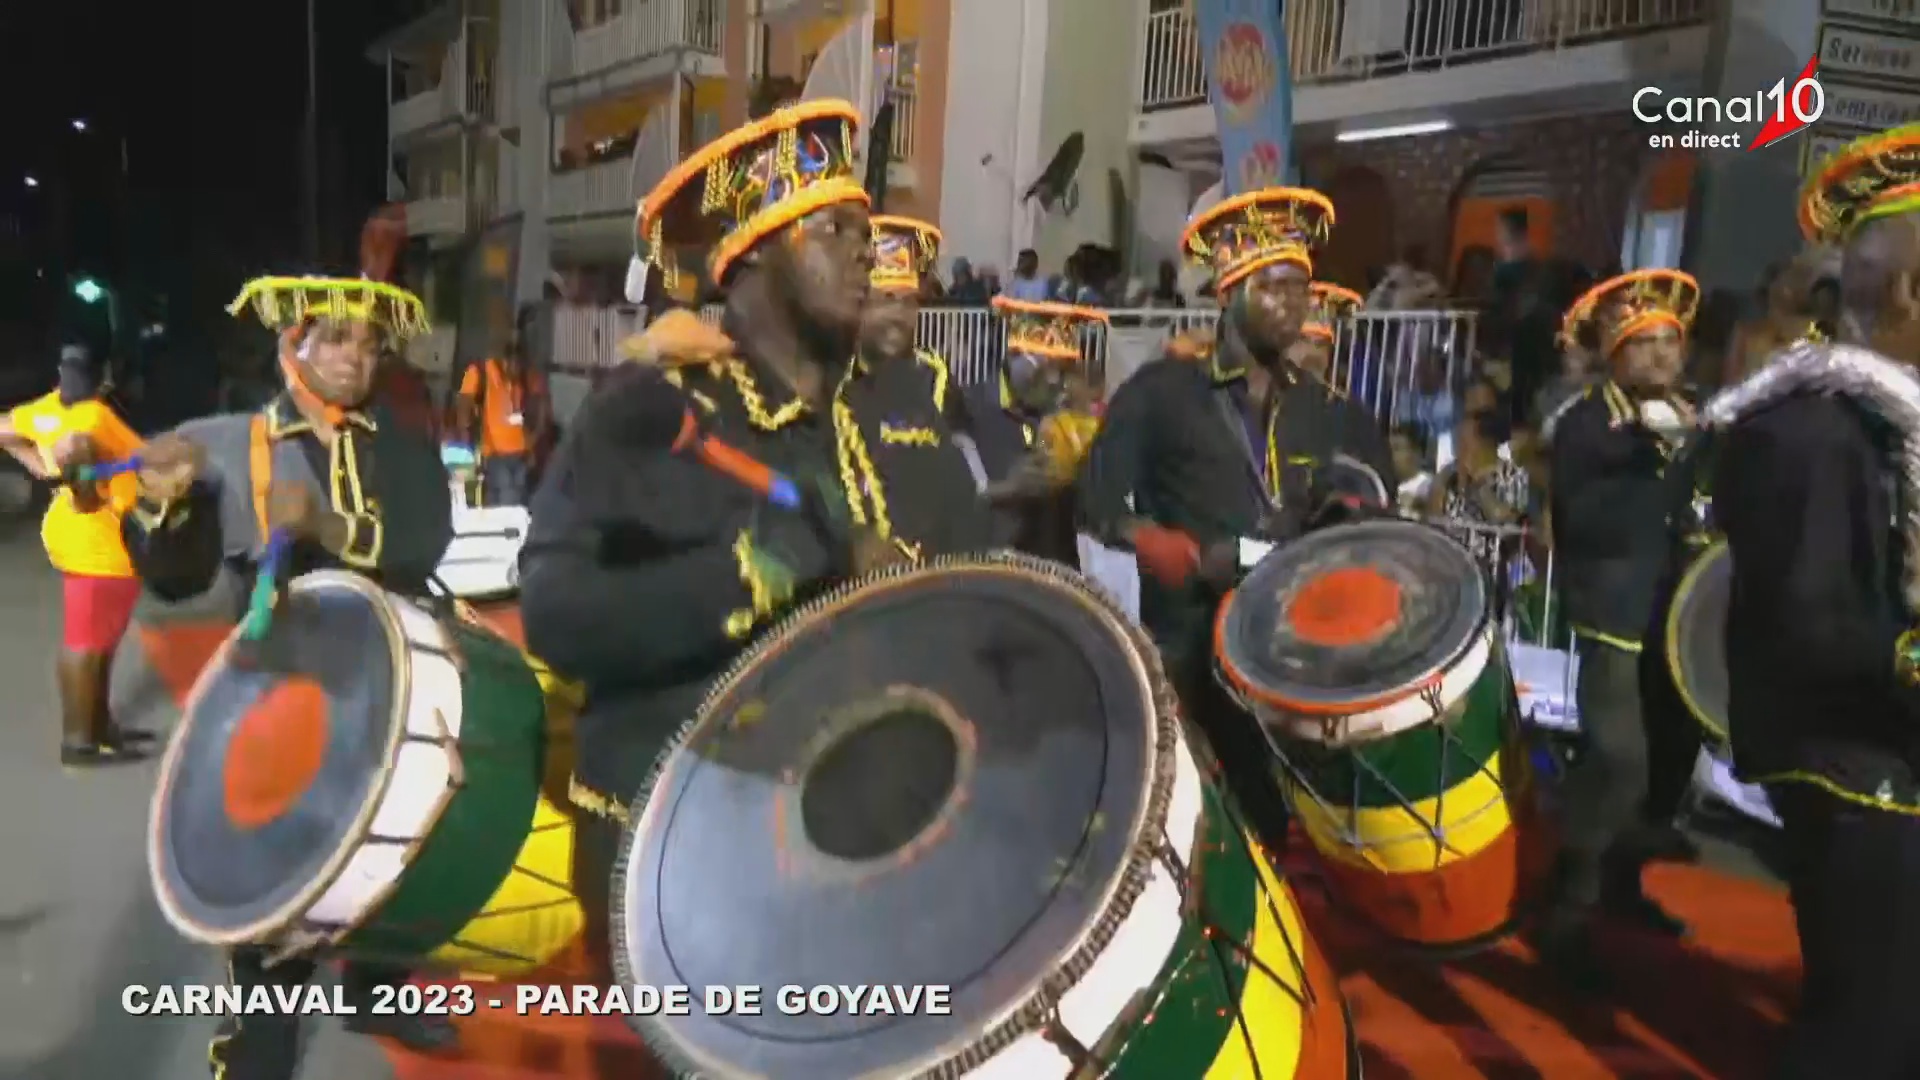 [Vidéo] Onews Guadeloupe. La Parade du carnaval à goyave (Canal10)